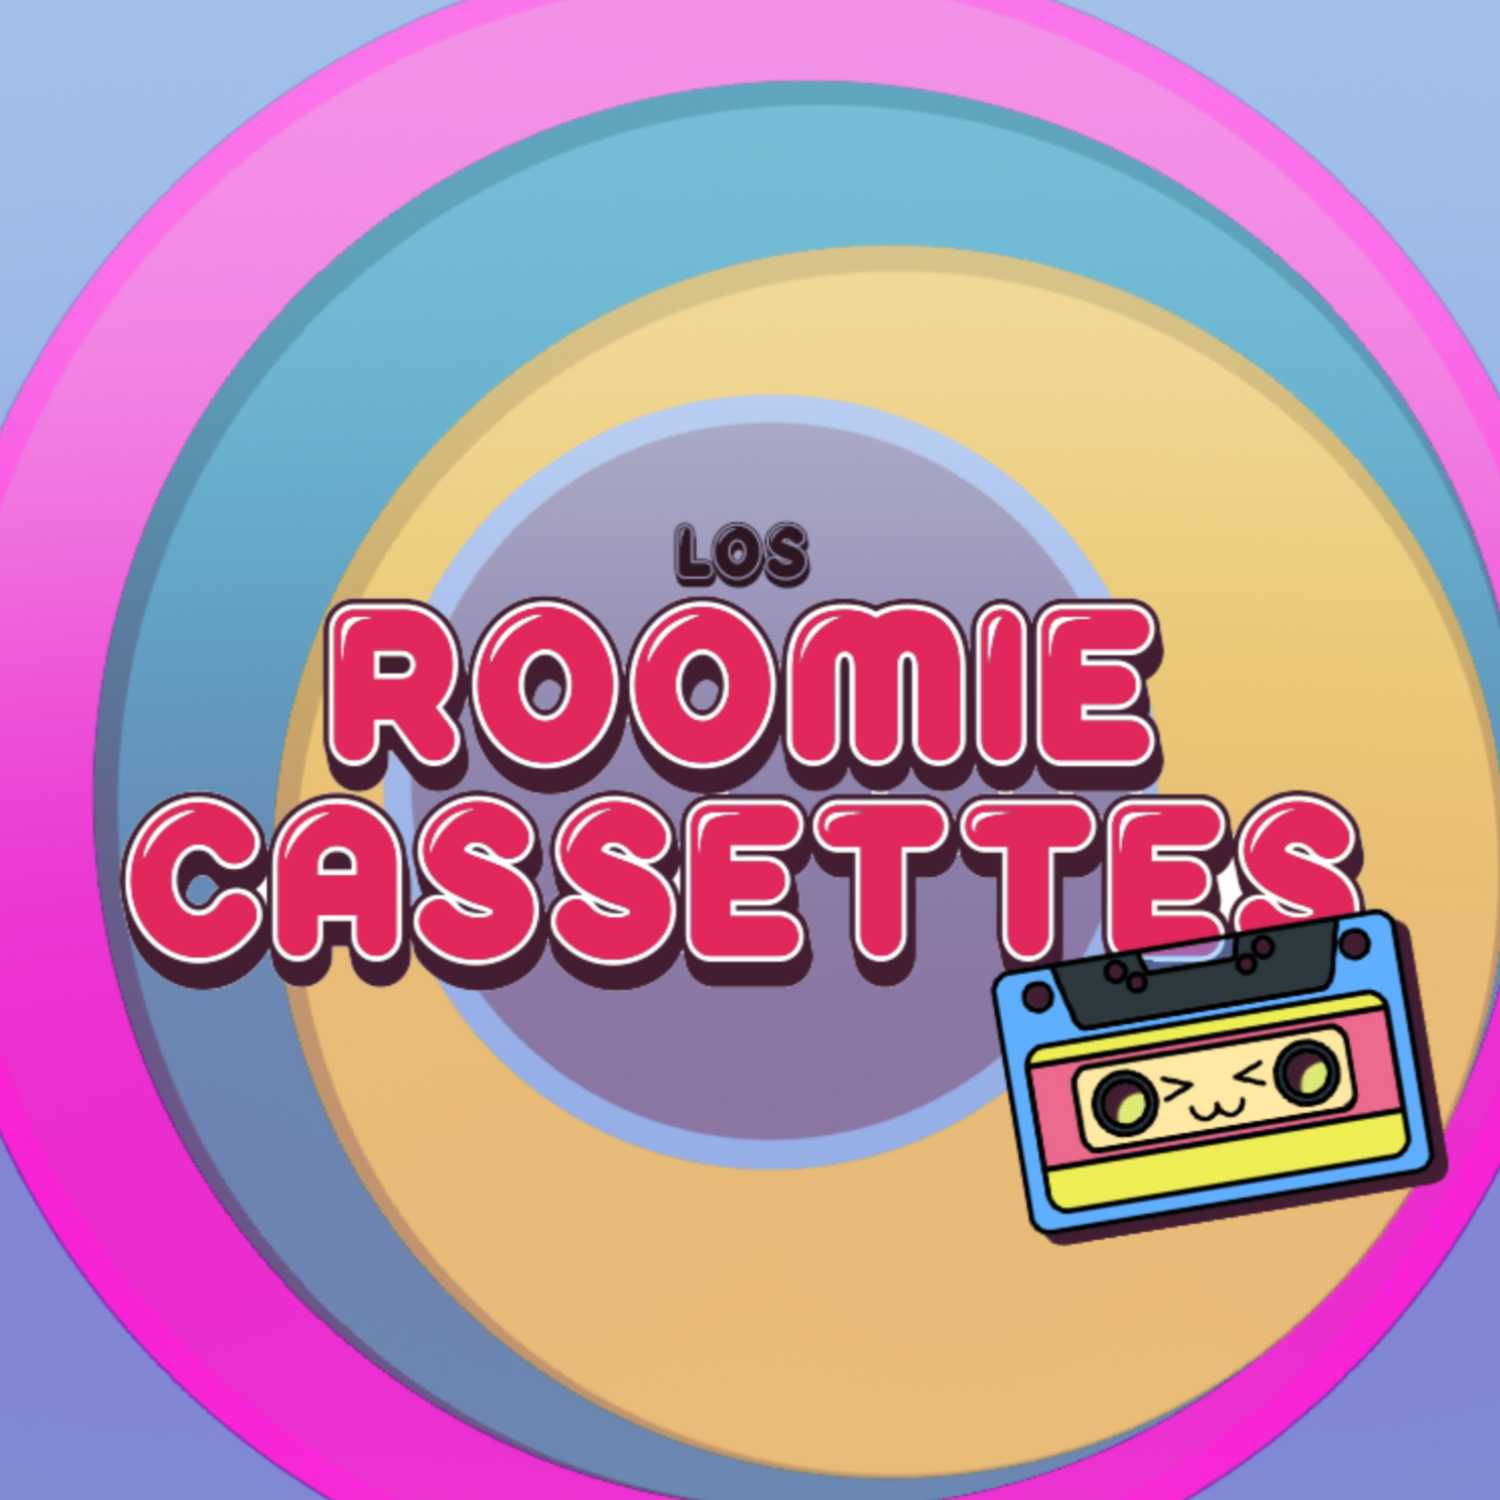 Roomie Cassettes